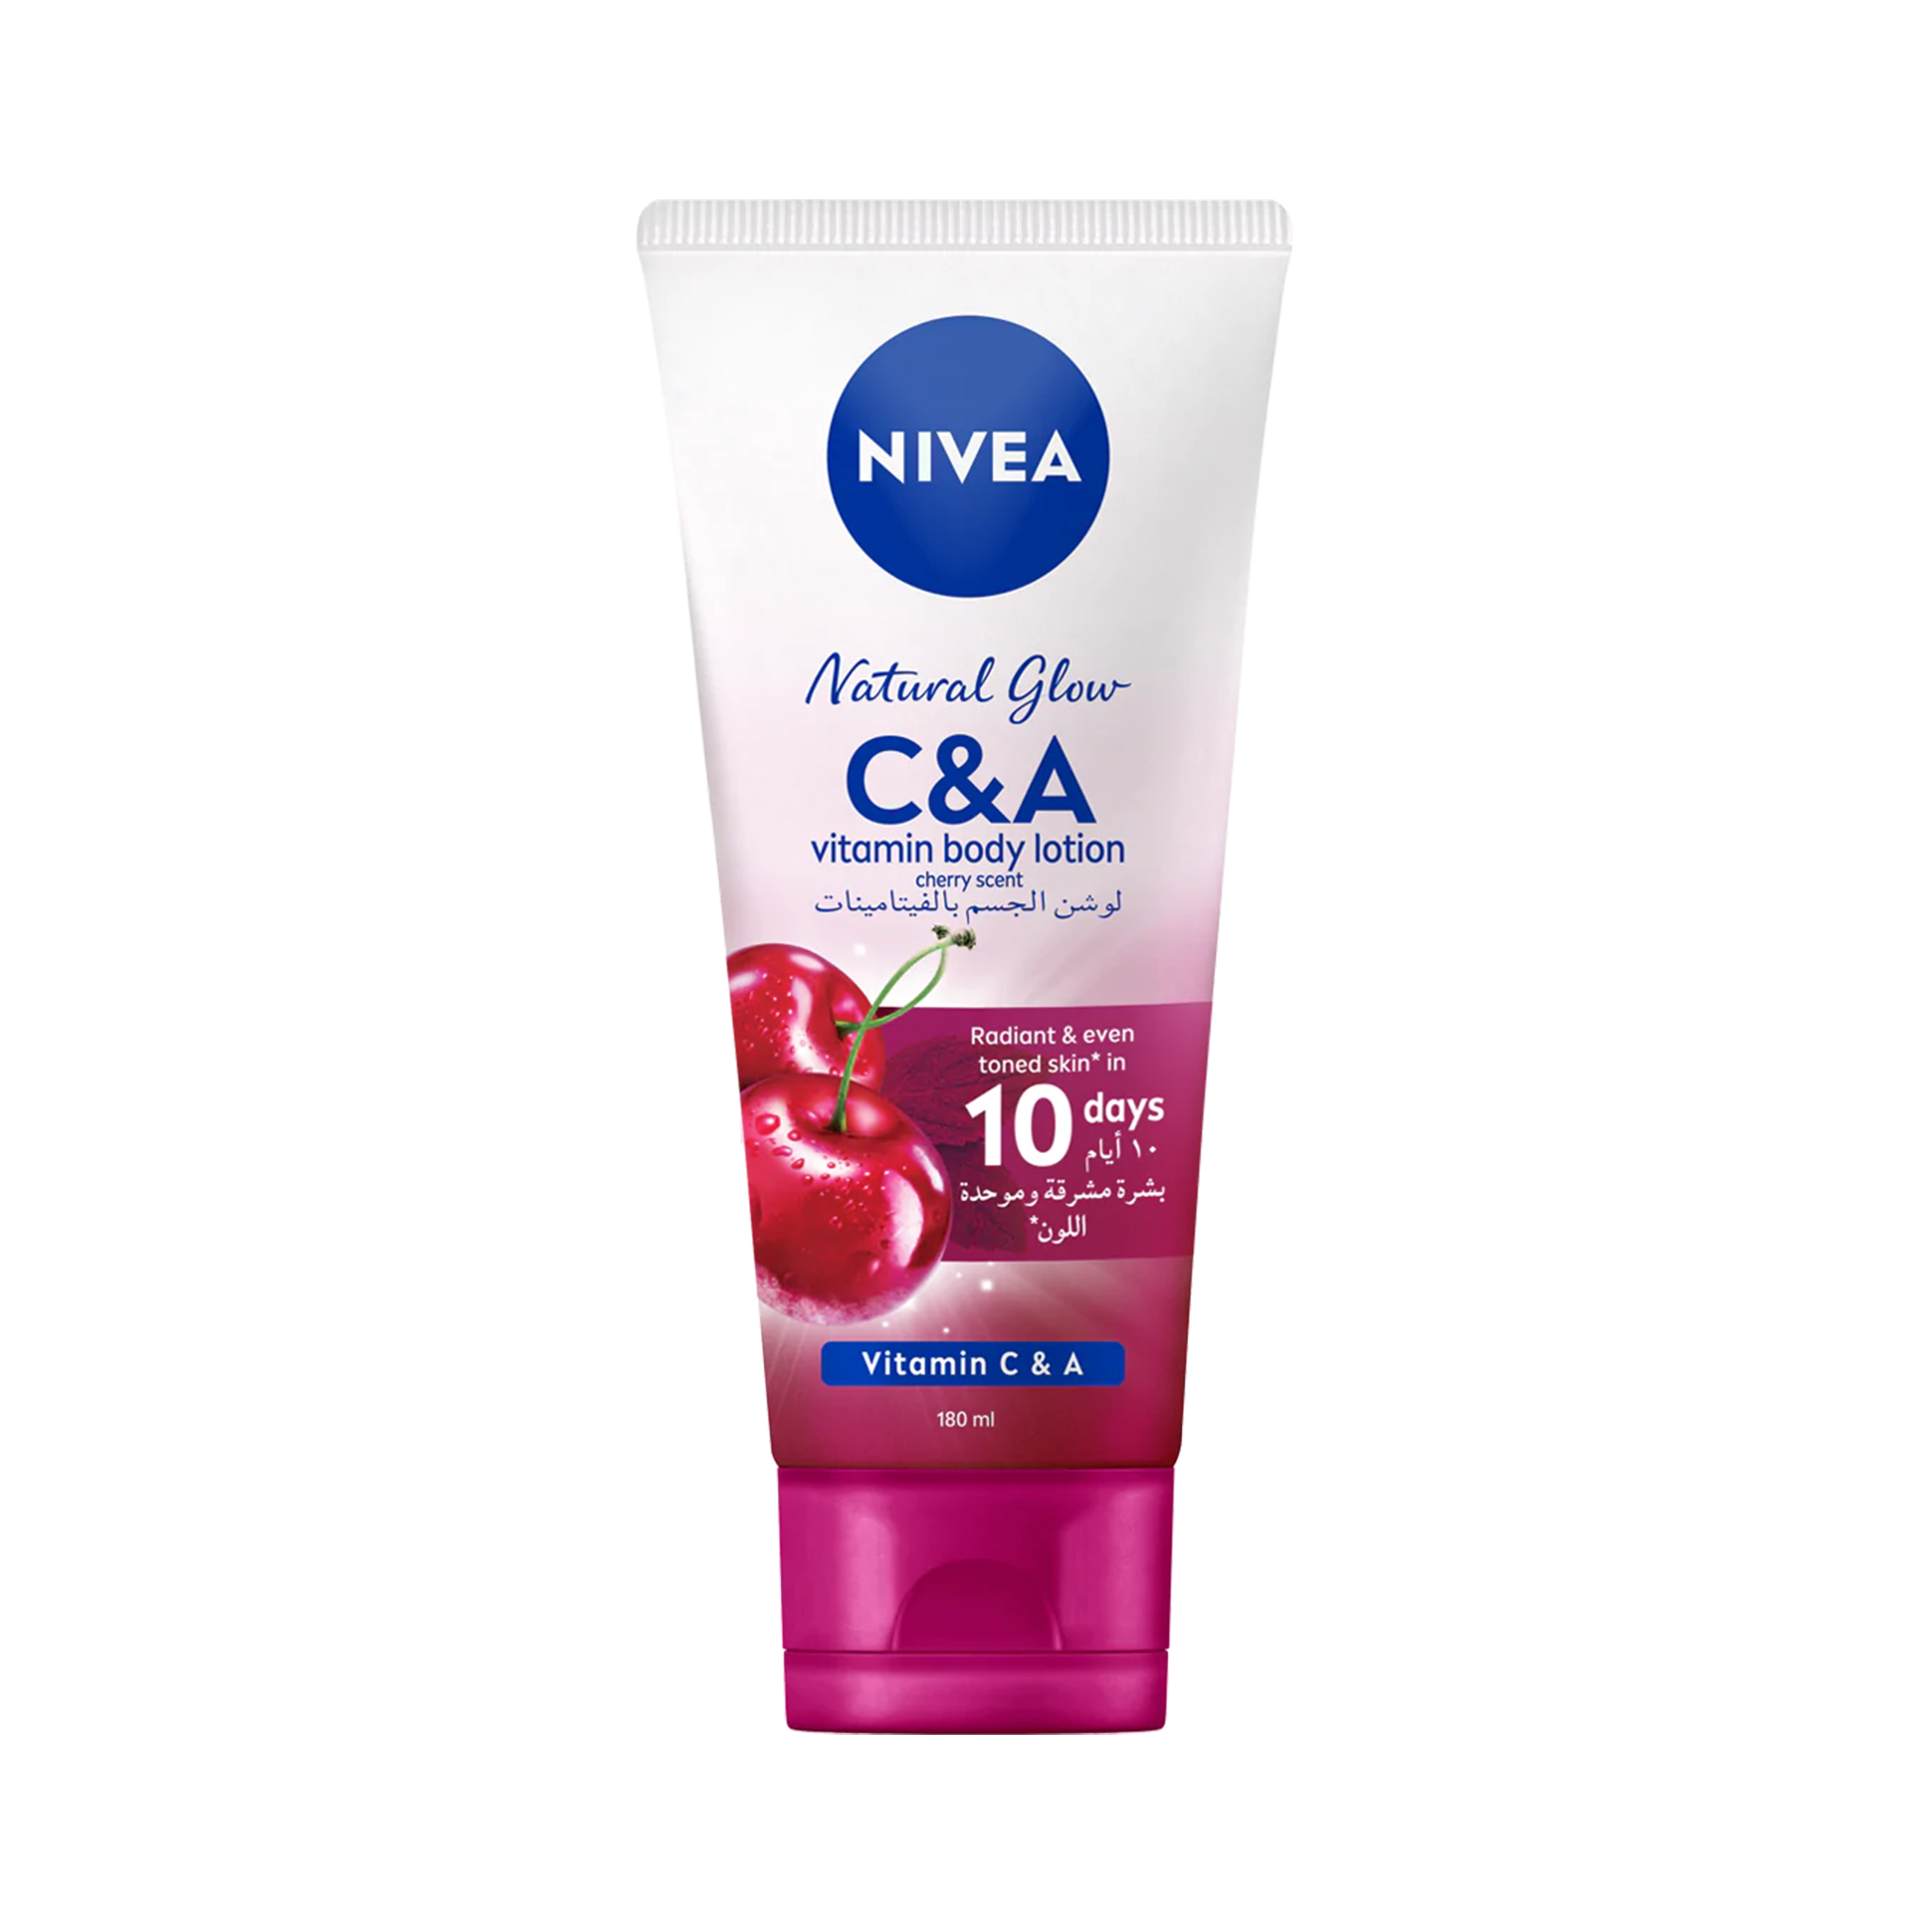 NIVEA Natural Glow Vitamin C & A Cherry Scented Body Lotion - White - 180ml - Radiant & Even Toned Skin - Deep Moisture - Cherry Scent - E11 Store